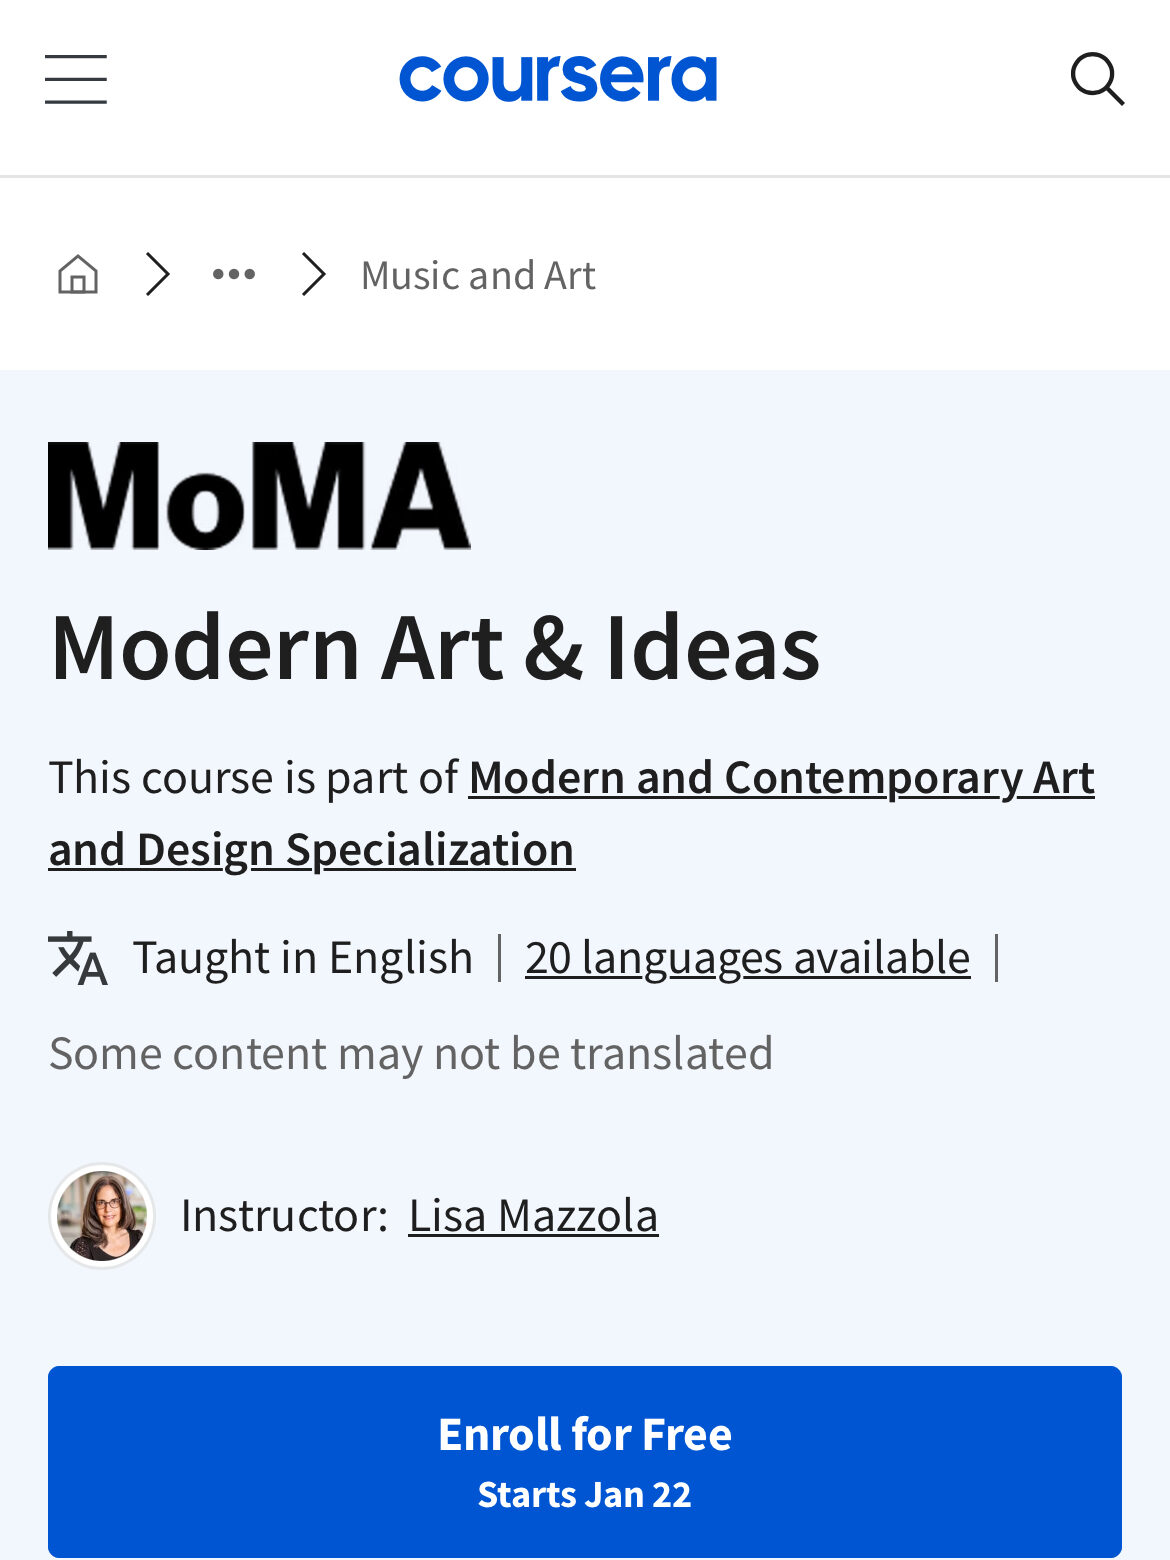 A screenshot of a Coursera course.